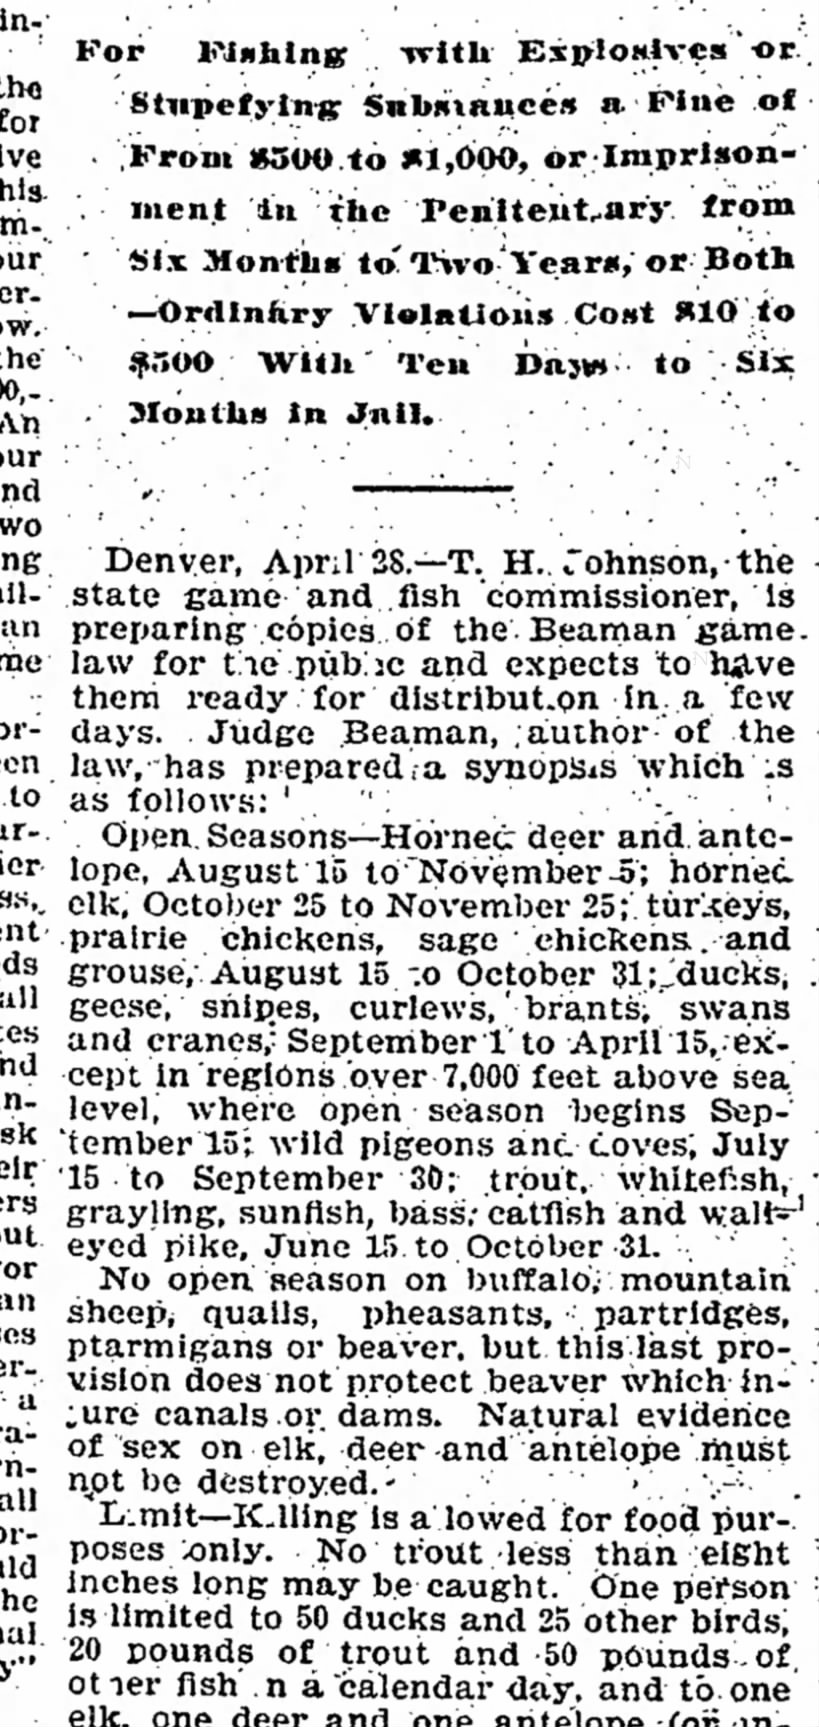 Colorado grayling 1899 fishing regs